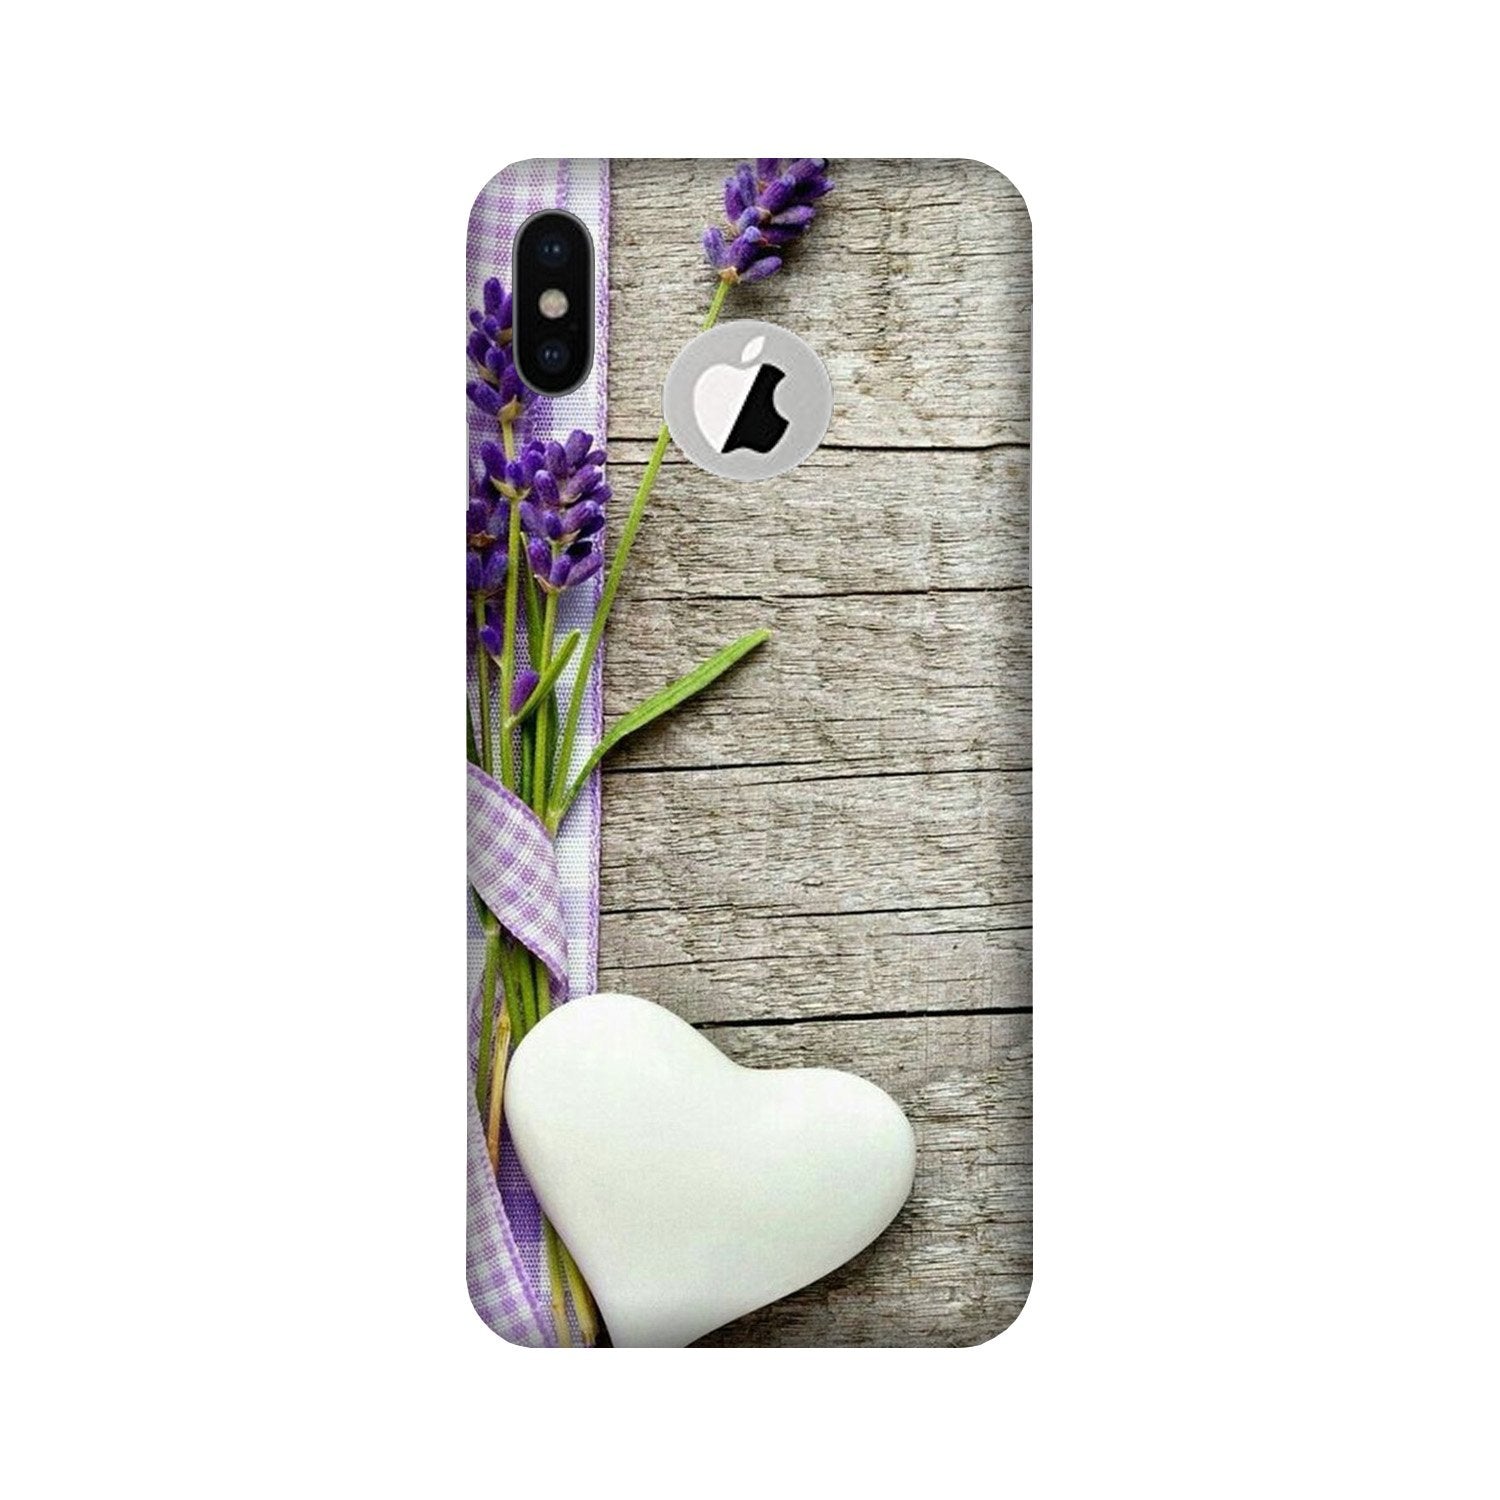 White Heart Case for iPhone Xs logo cut(Design No. 298)